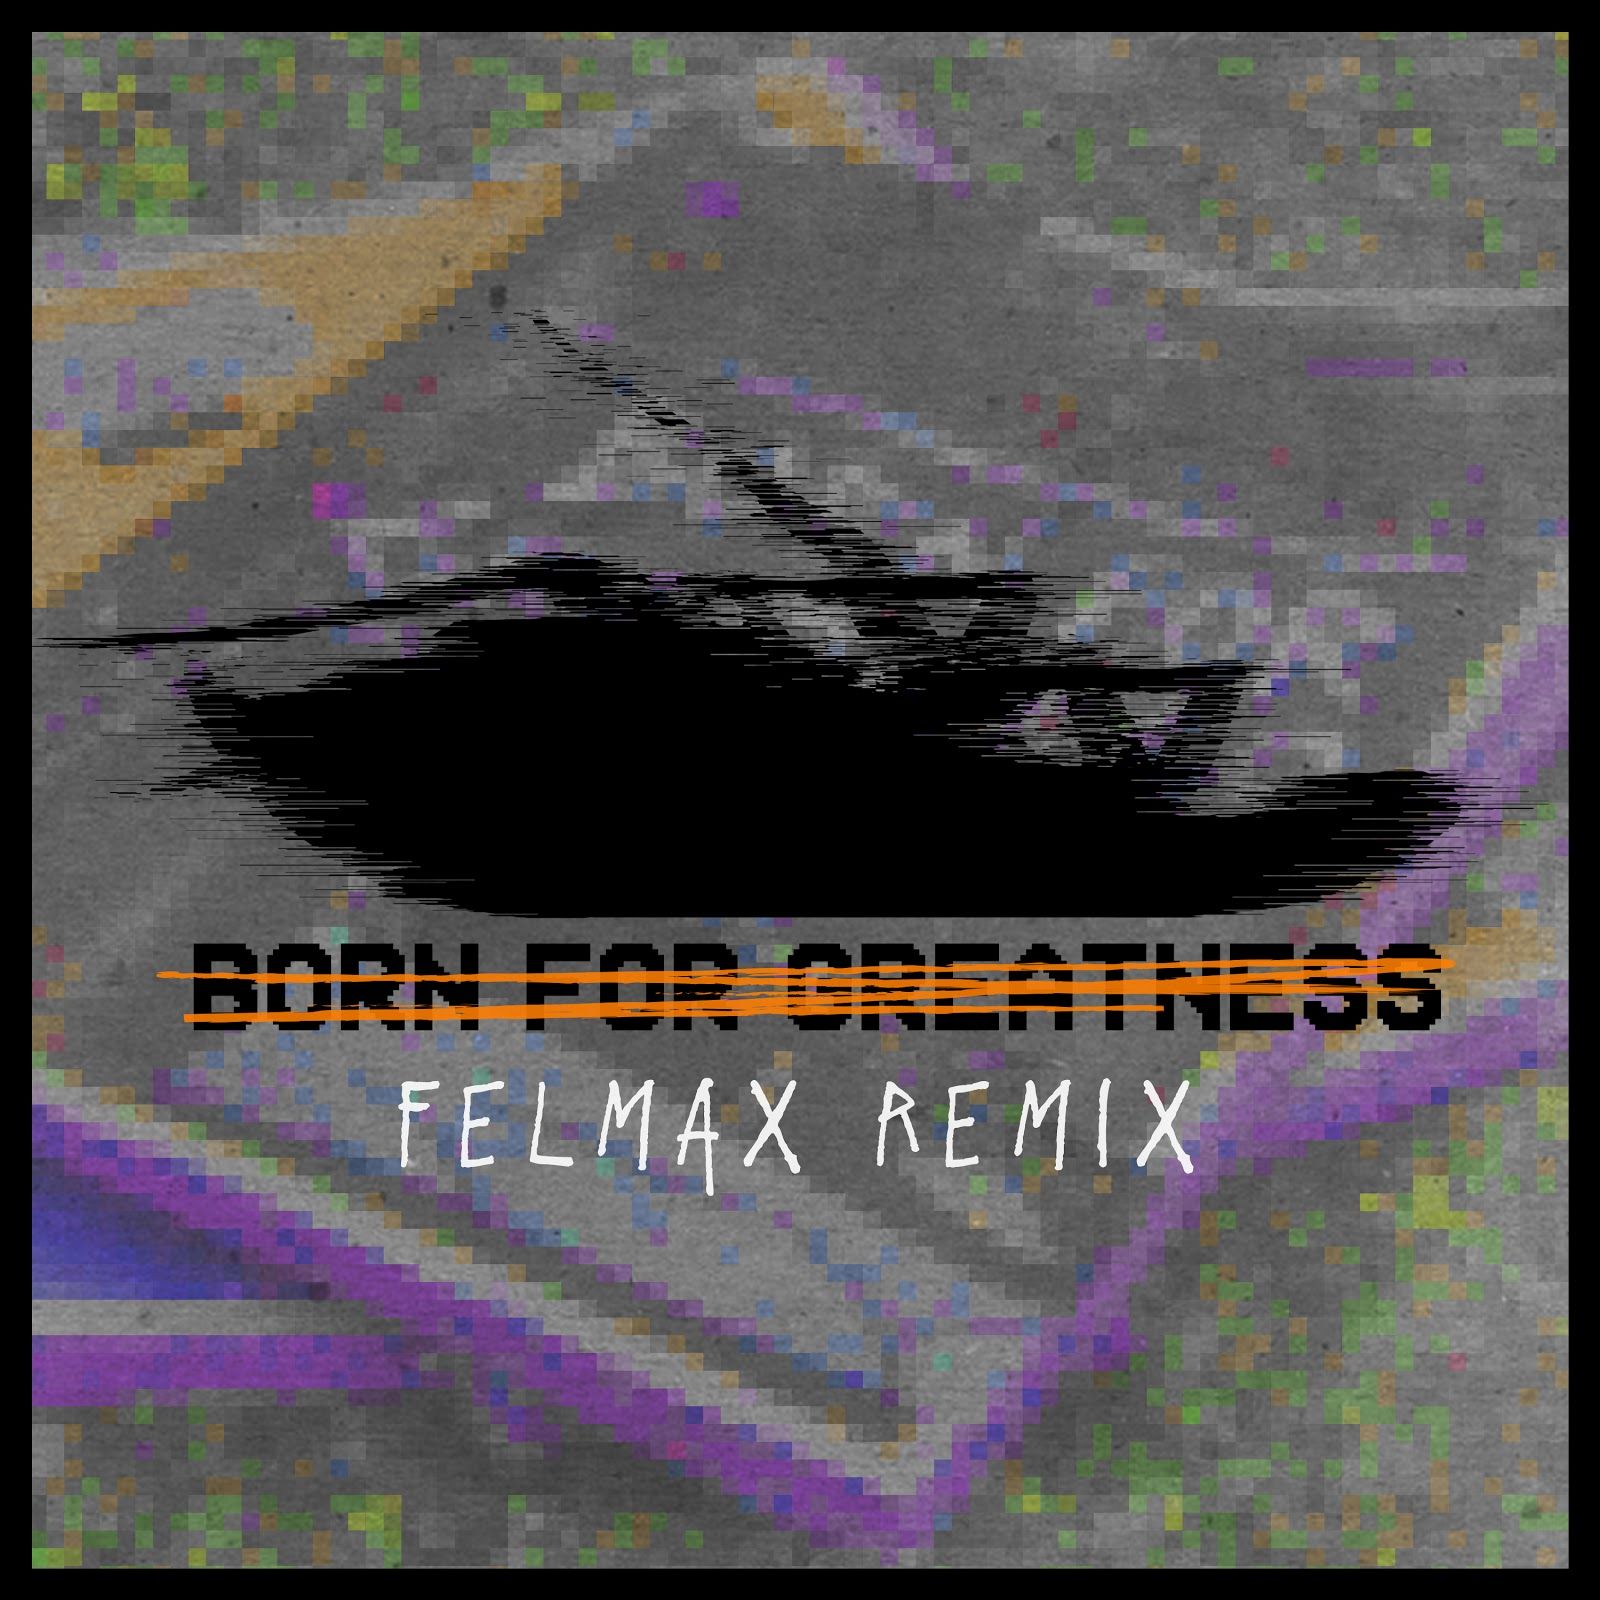 par-bfg-remix-felmax.jpg